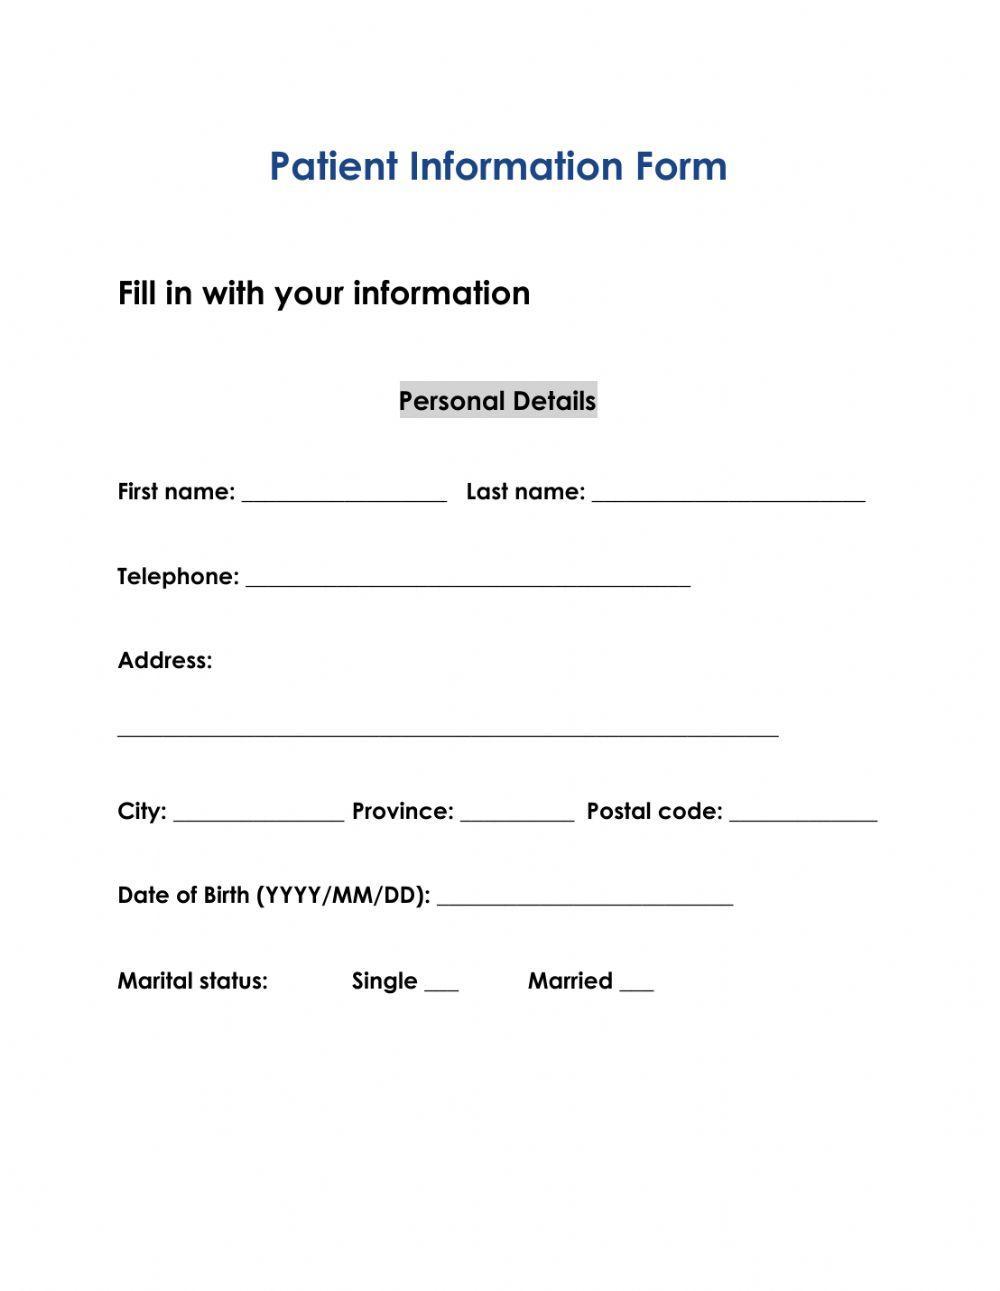 Patient information form